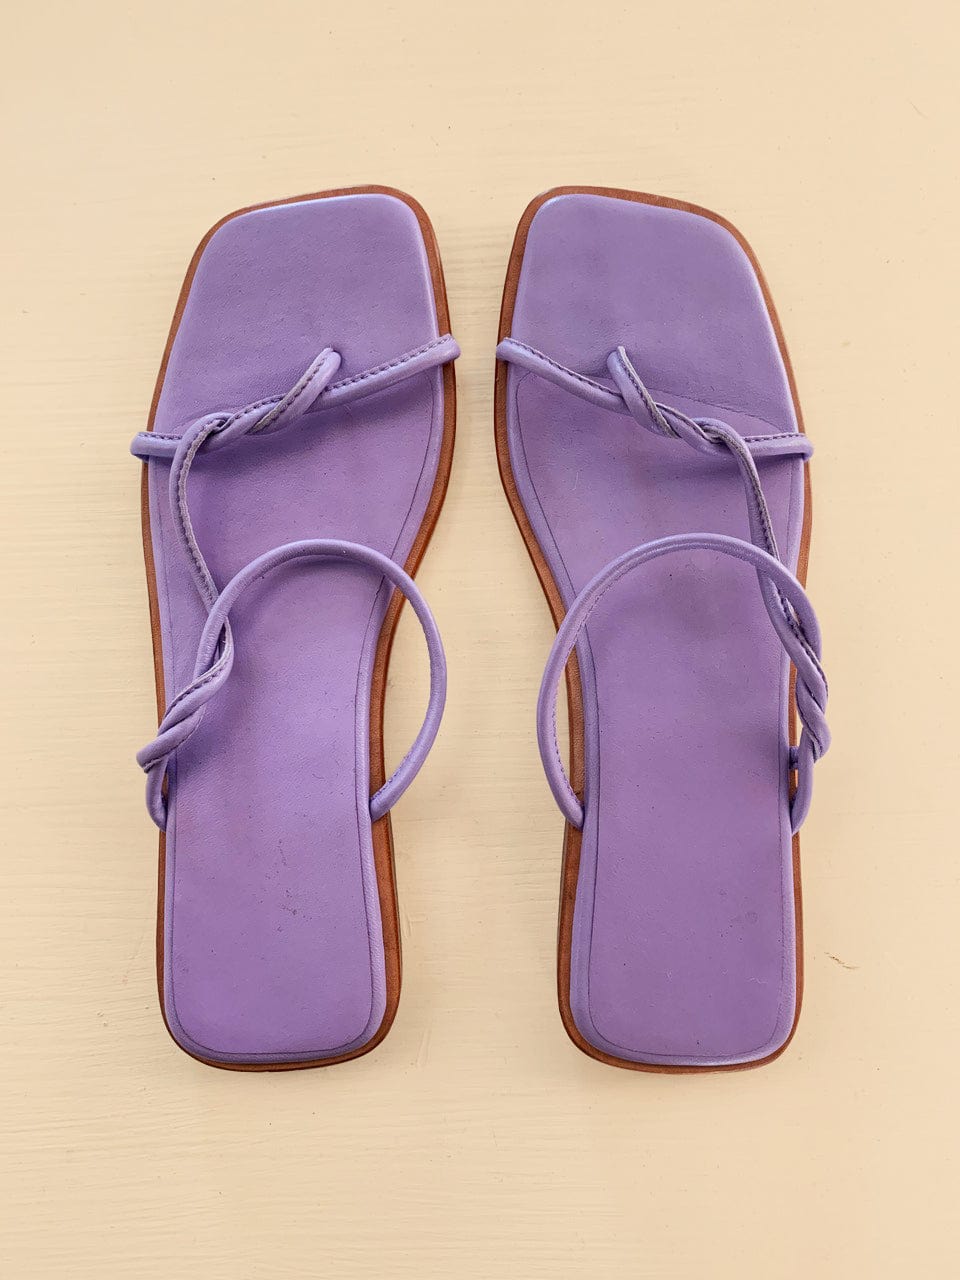 Wisteria Sandals (Lavender)